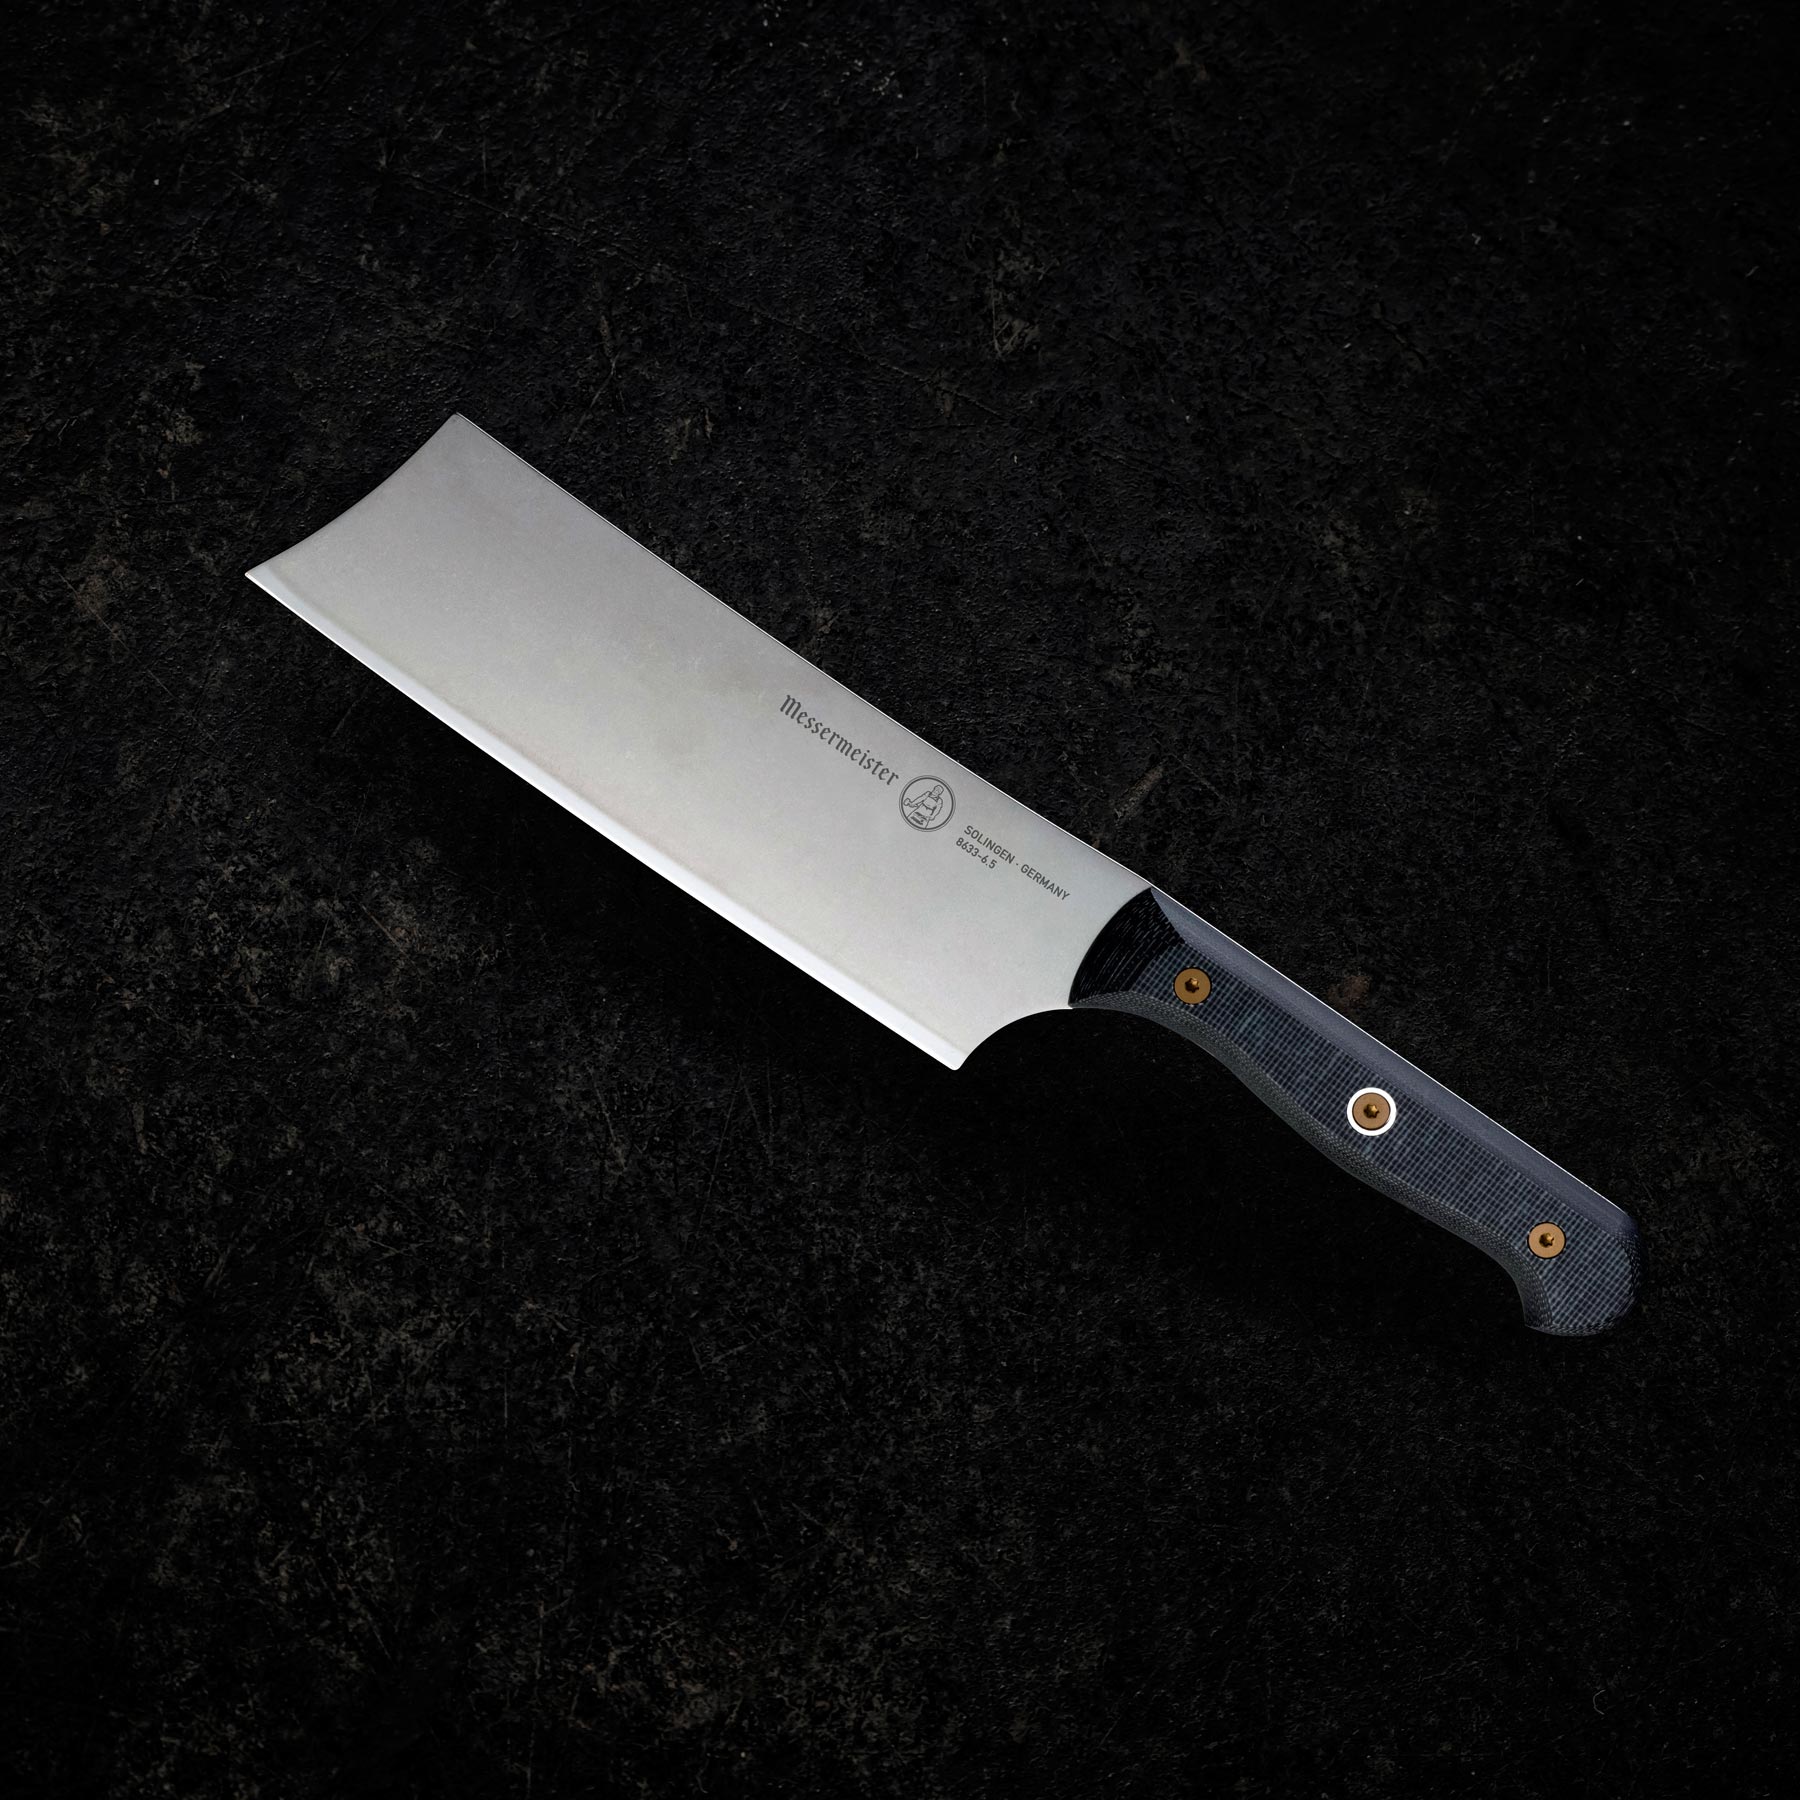 Ceramic Knife Review 2022